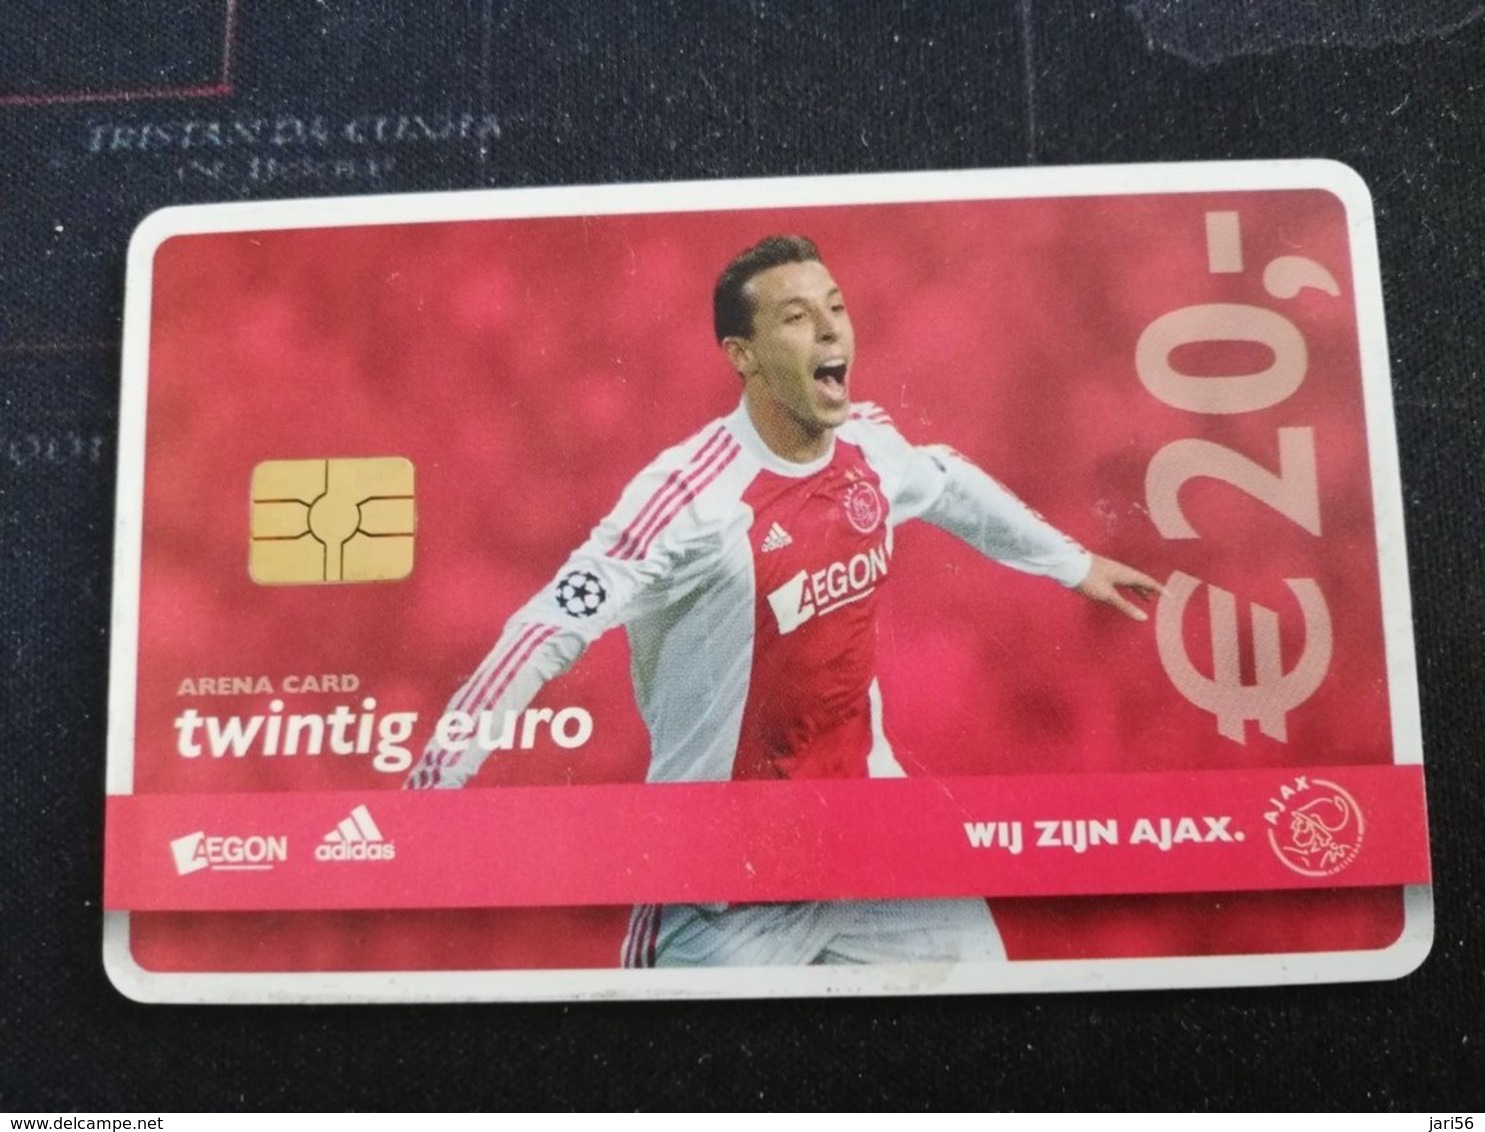 NETHERLANDS  ARENA CARD FOOTBAL/SOCCER  AJAX AMSTERDAM ABDELAOUI  €20, USED CARD  ** 1420 ** - Publiques